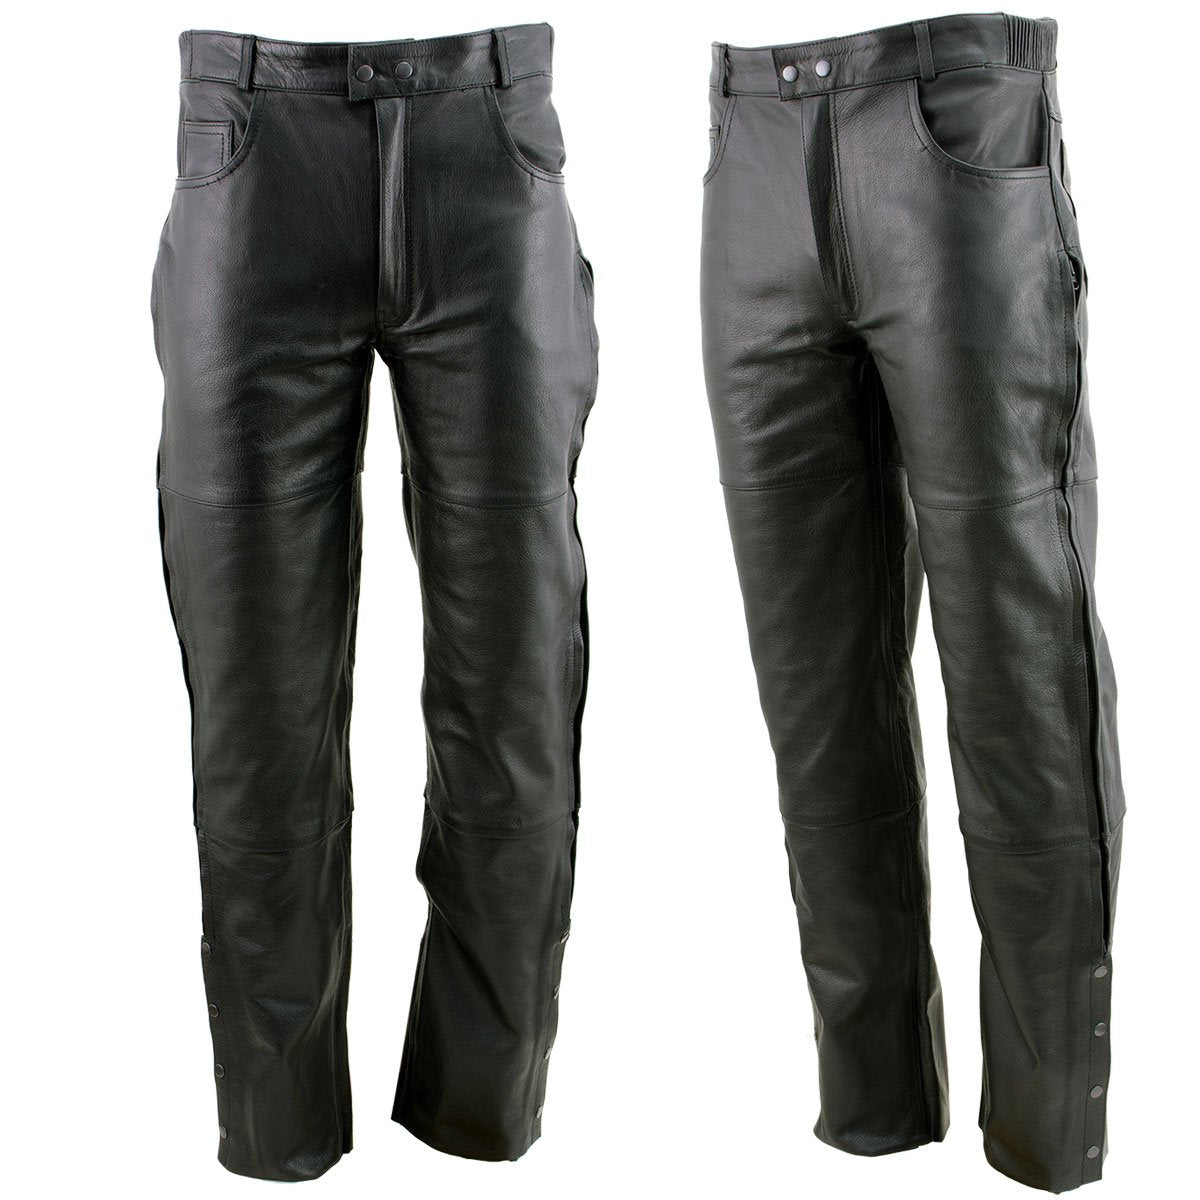 Xelement B7470 Men's Black Premium Leather Motorcycle Overpants with ...